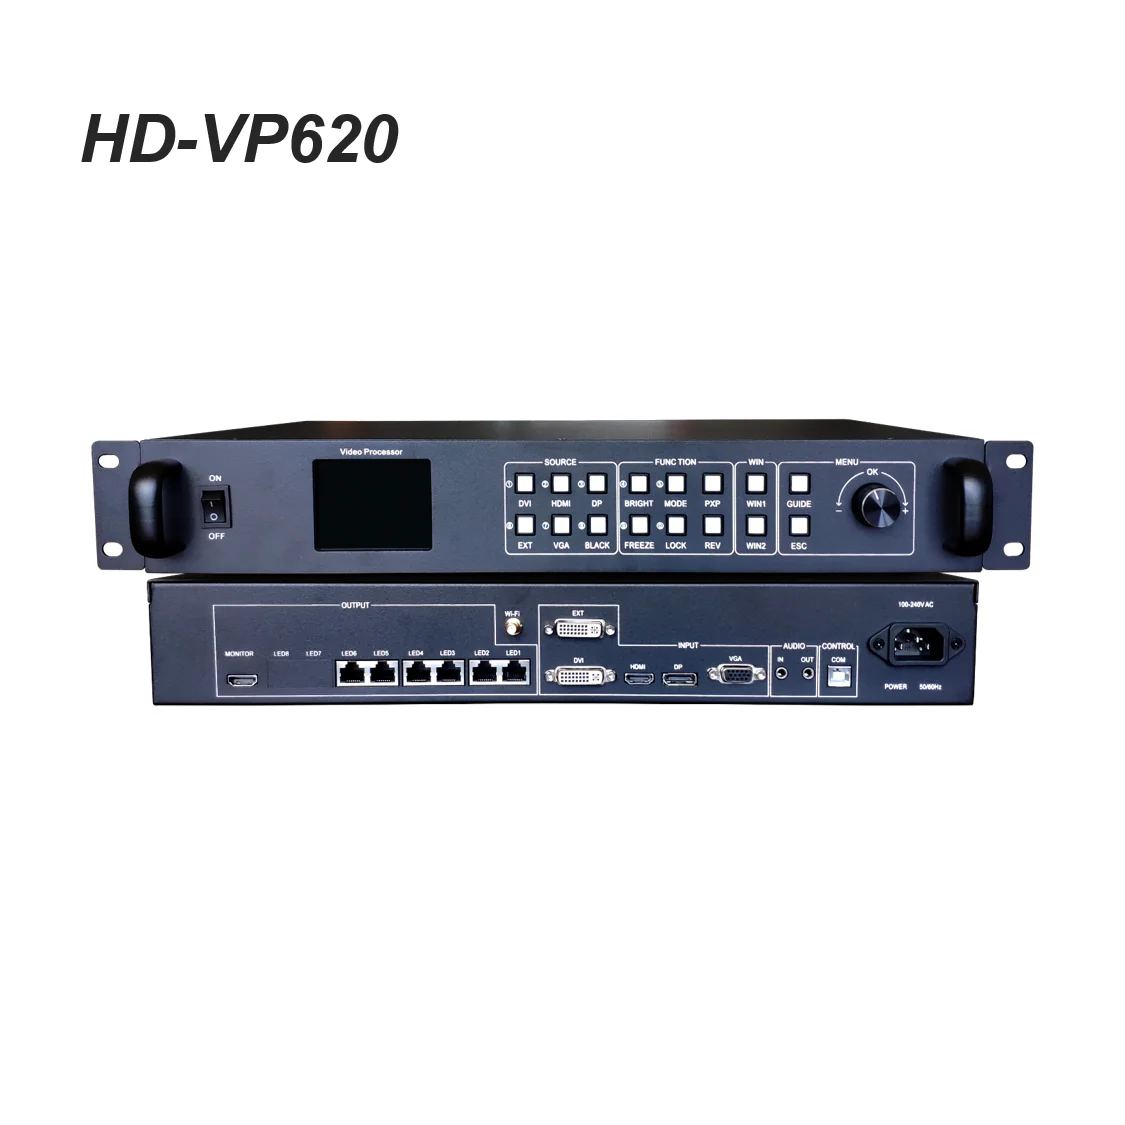 HD-VP620